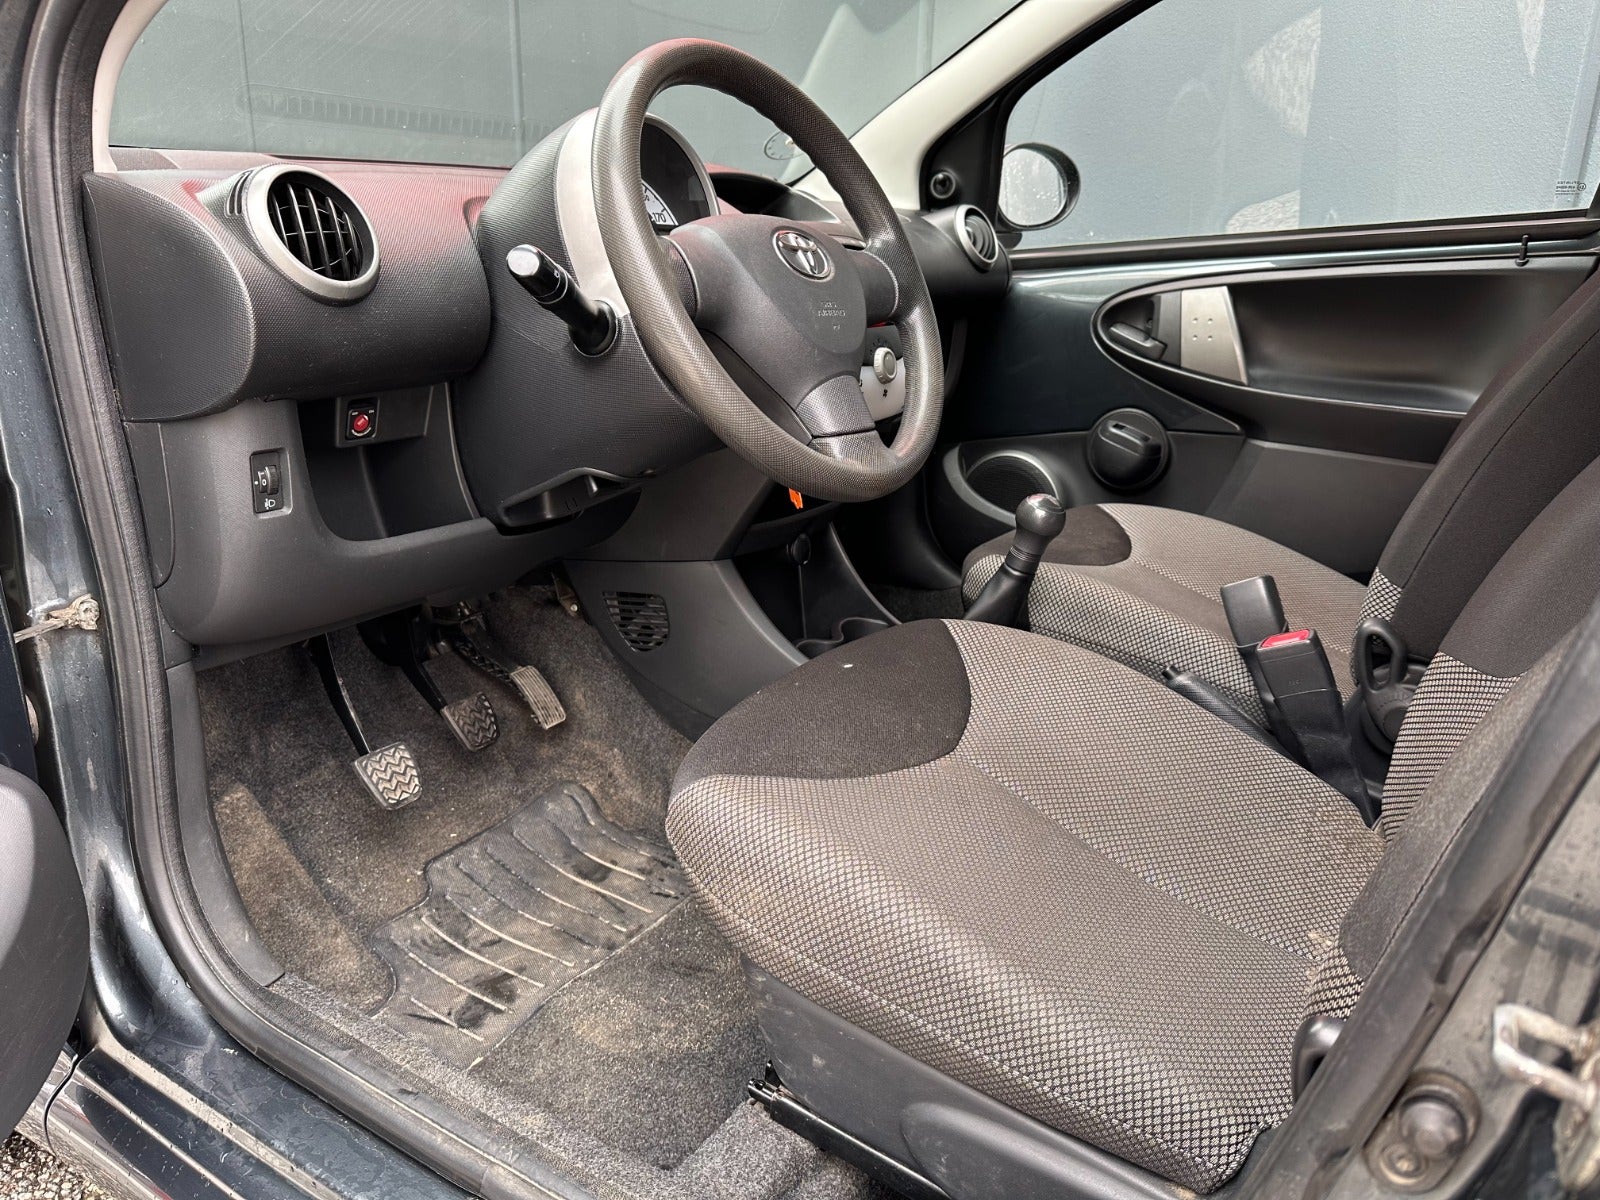 Toyota Aygo 1,0 Benzin modelår 2012 km 230000 ABS airbag